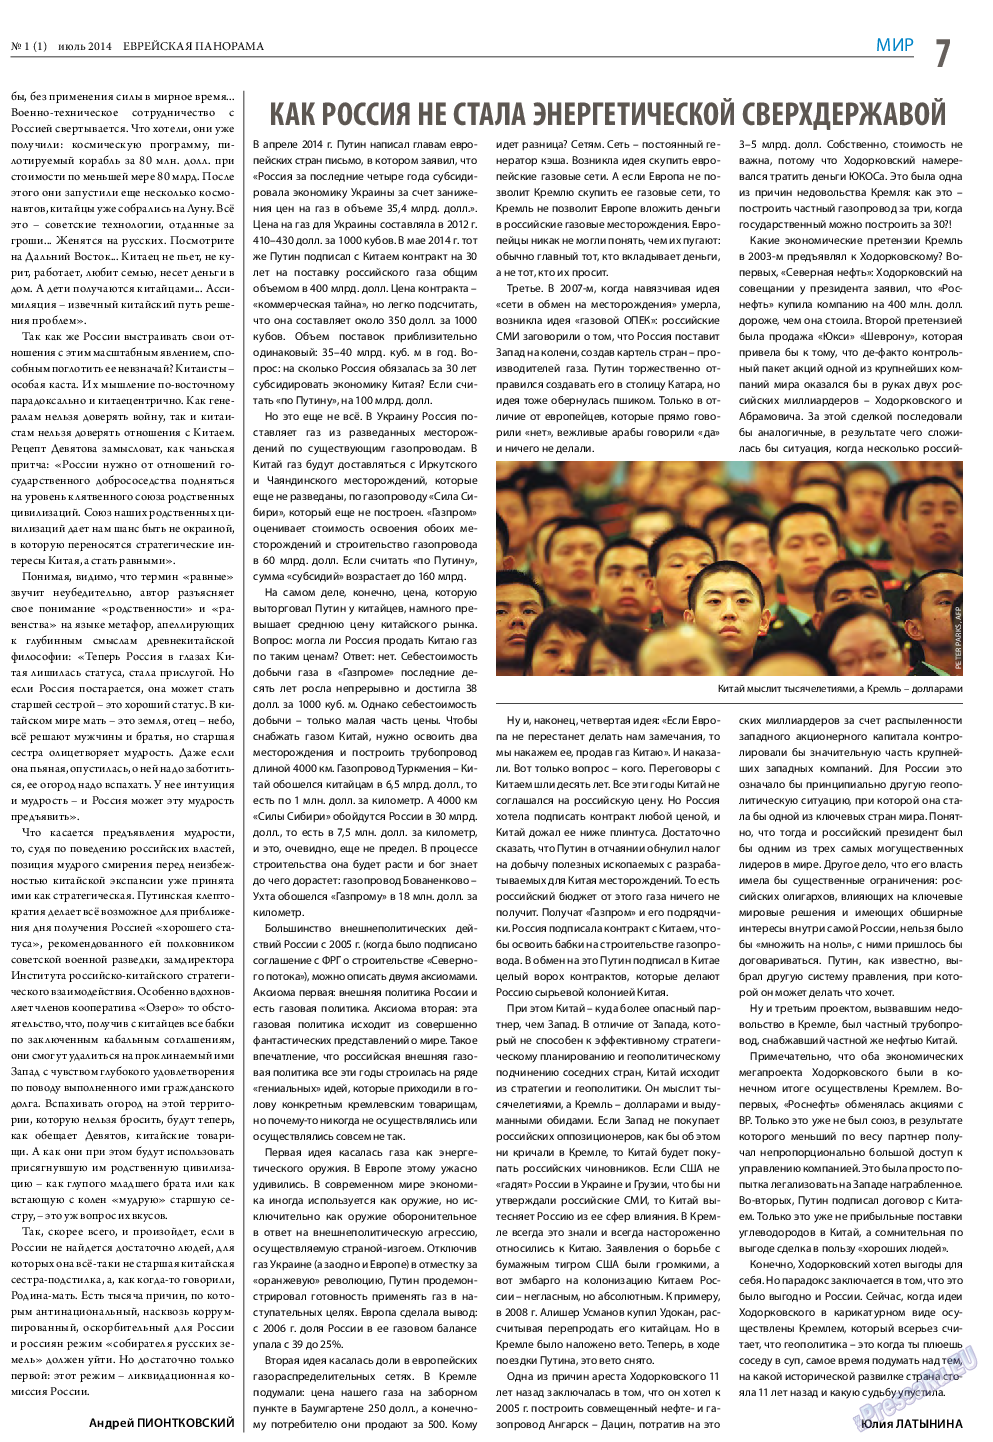 Еврейская панорама, газета. 2014 №1 стр.7